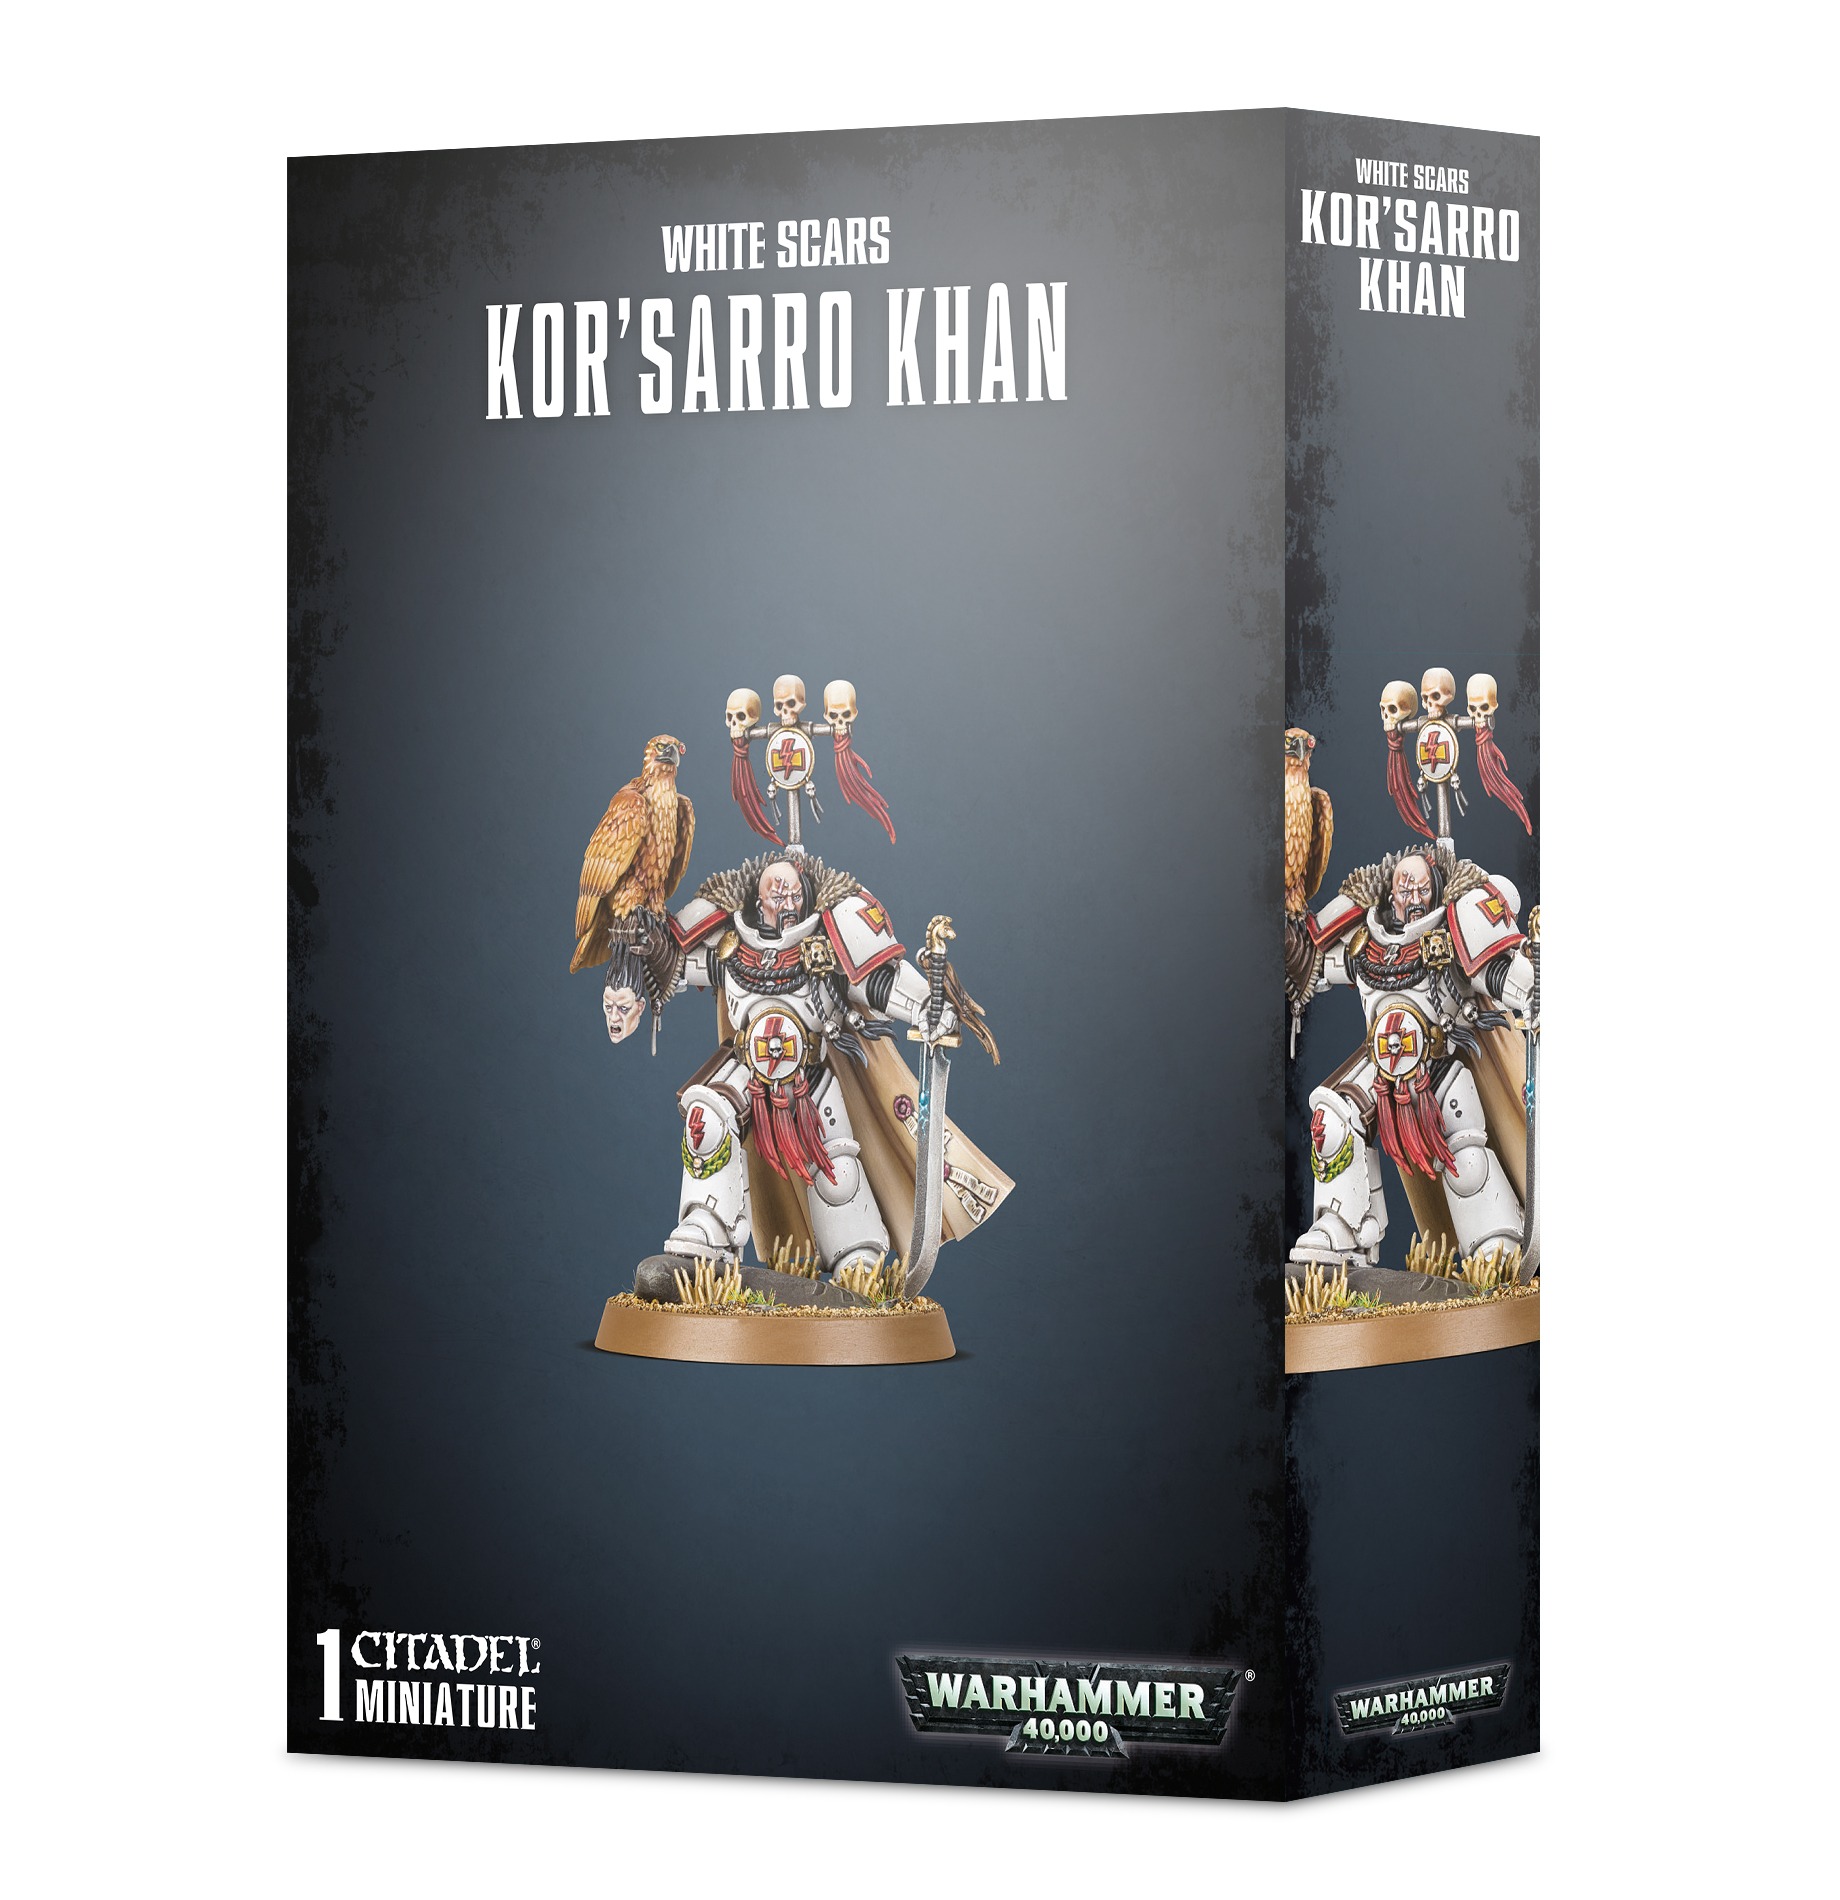 Warhammer 40,000: Space Marines: White Scars Korsarro Khan 